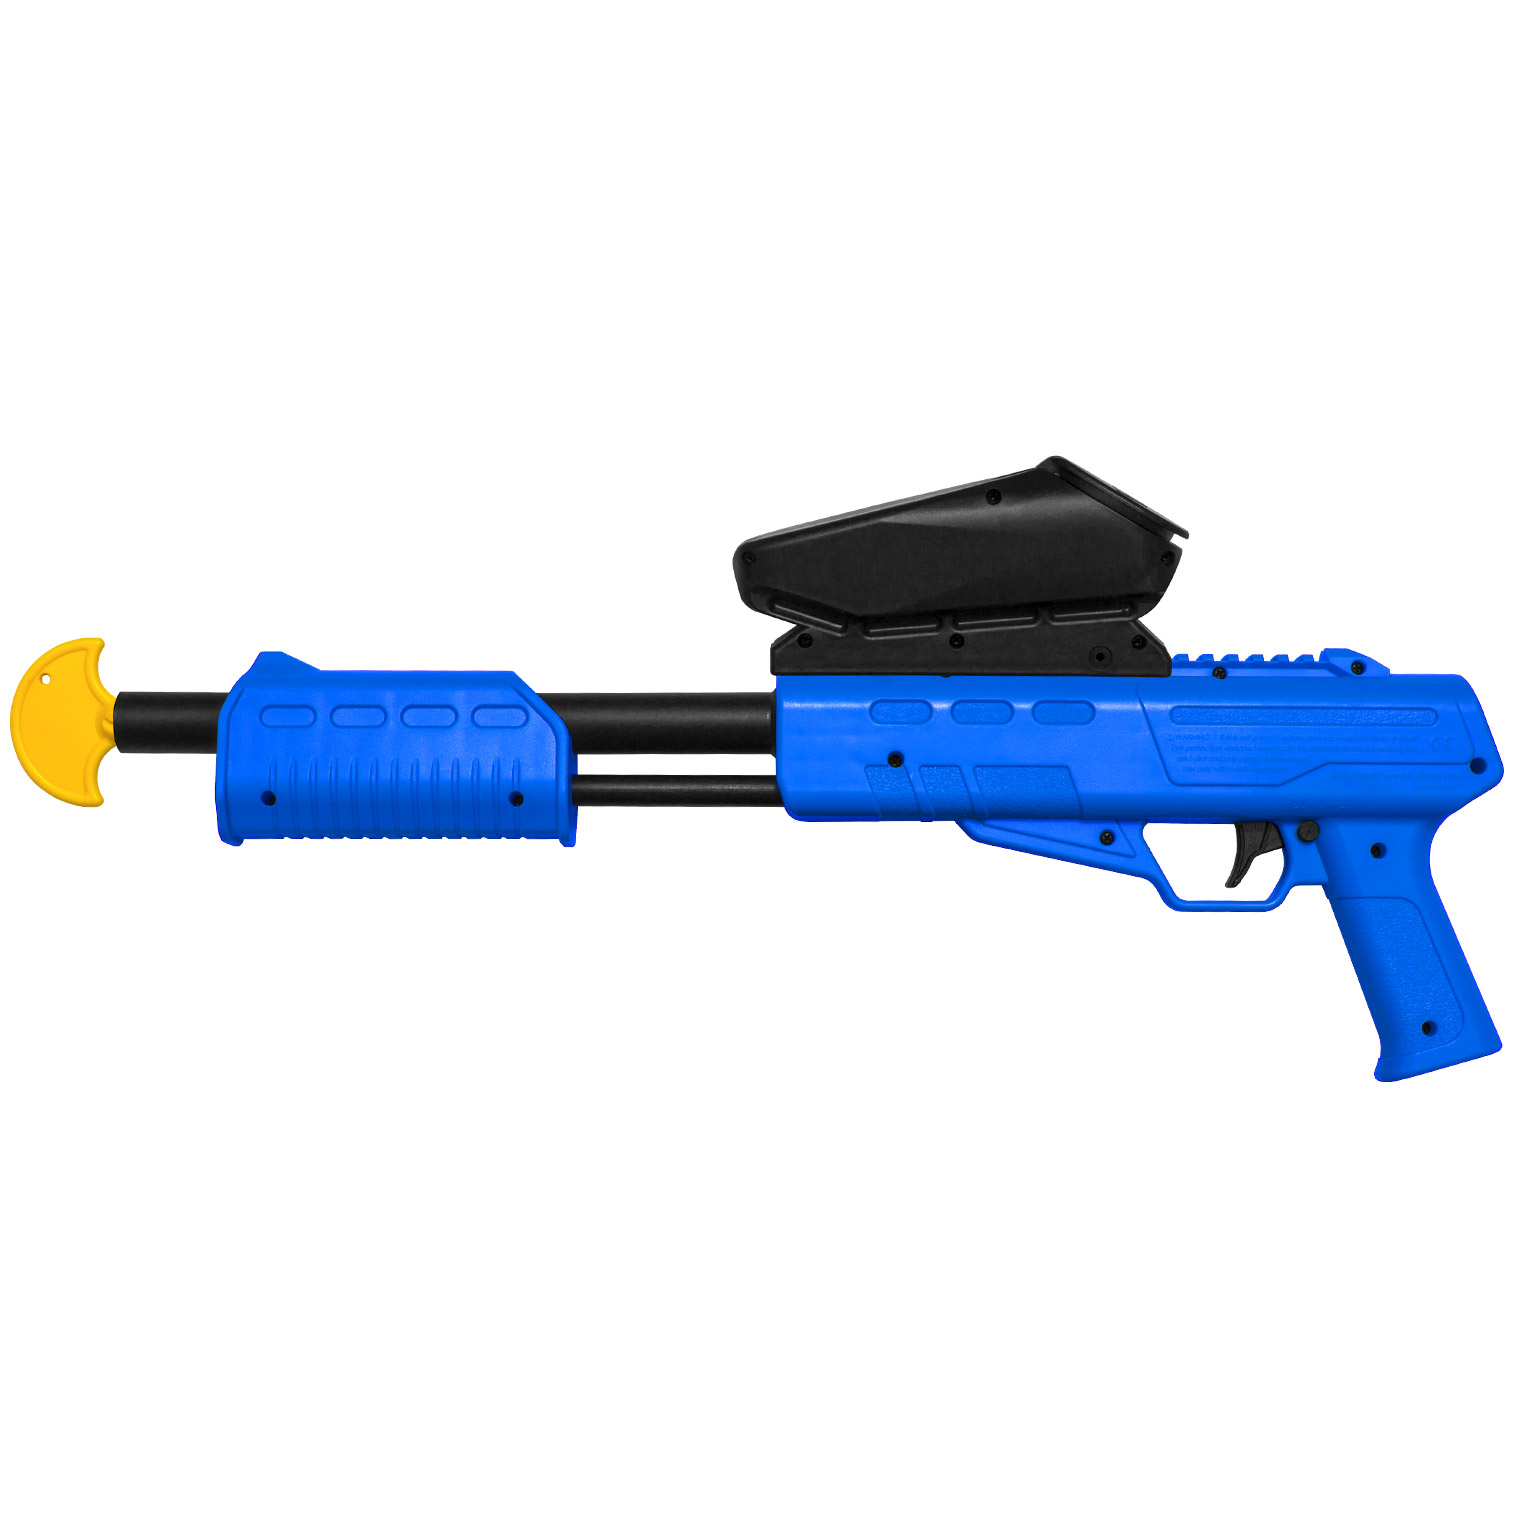 Blaster Kids Markierer Gotcha Gun cal. 50 (0.5 J) inkl. Loader - blau